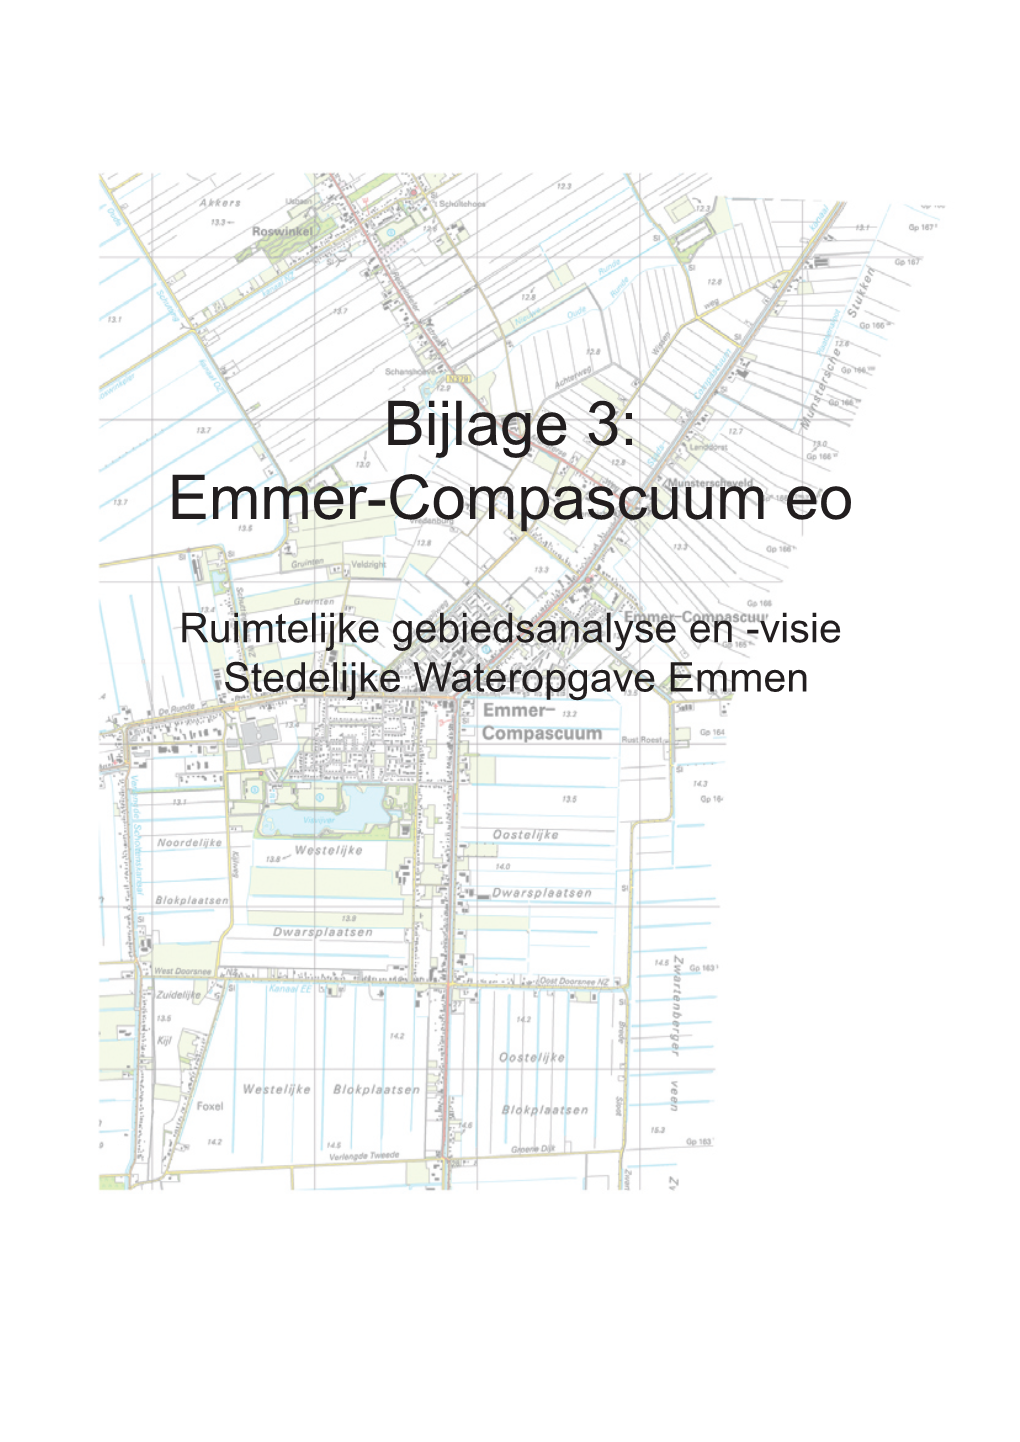 Emmer-Compascuum Eo